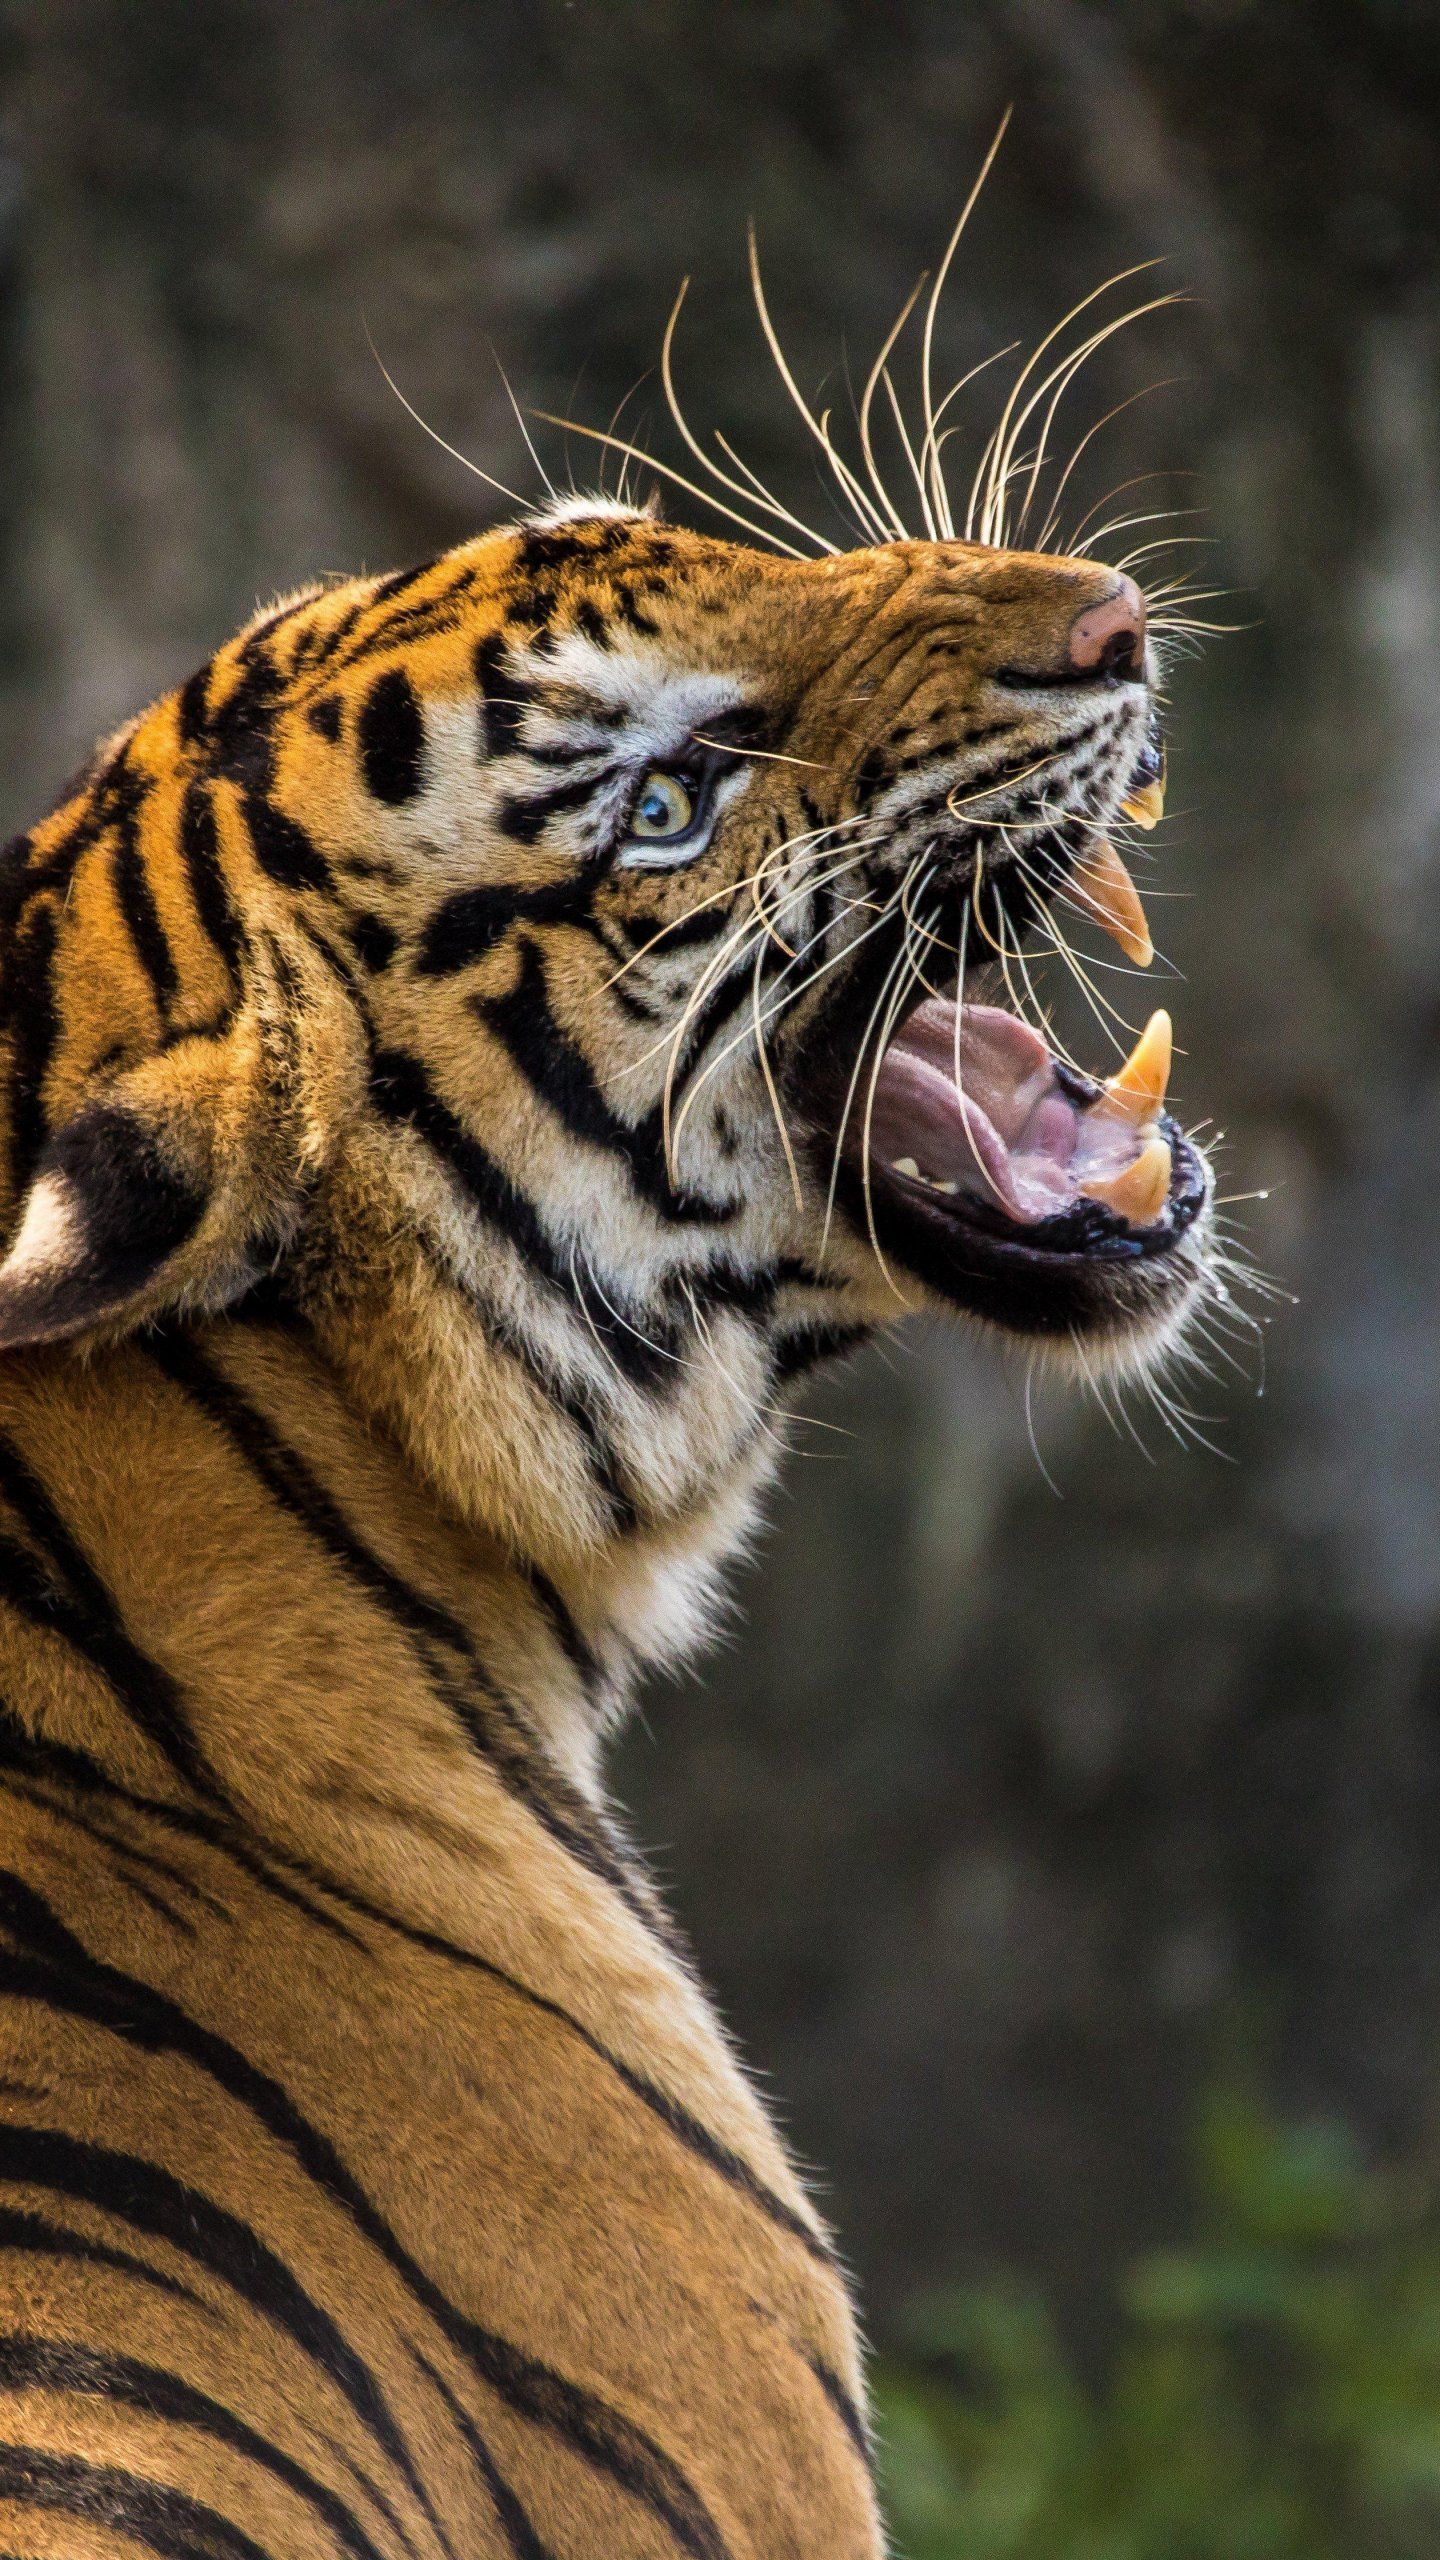 Tiger Roaring Wallpaper, Android & Desktop Background